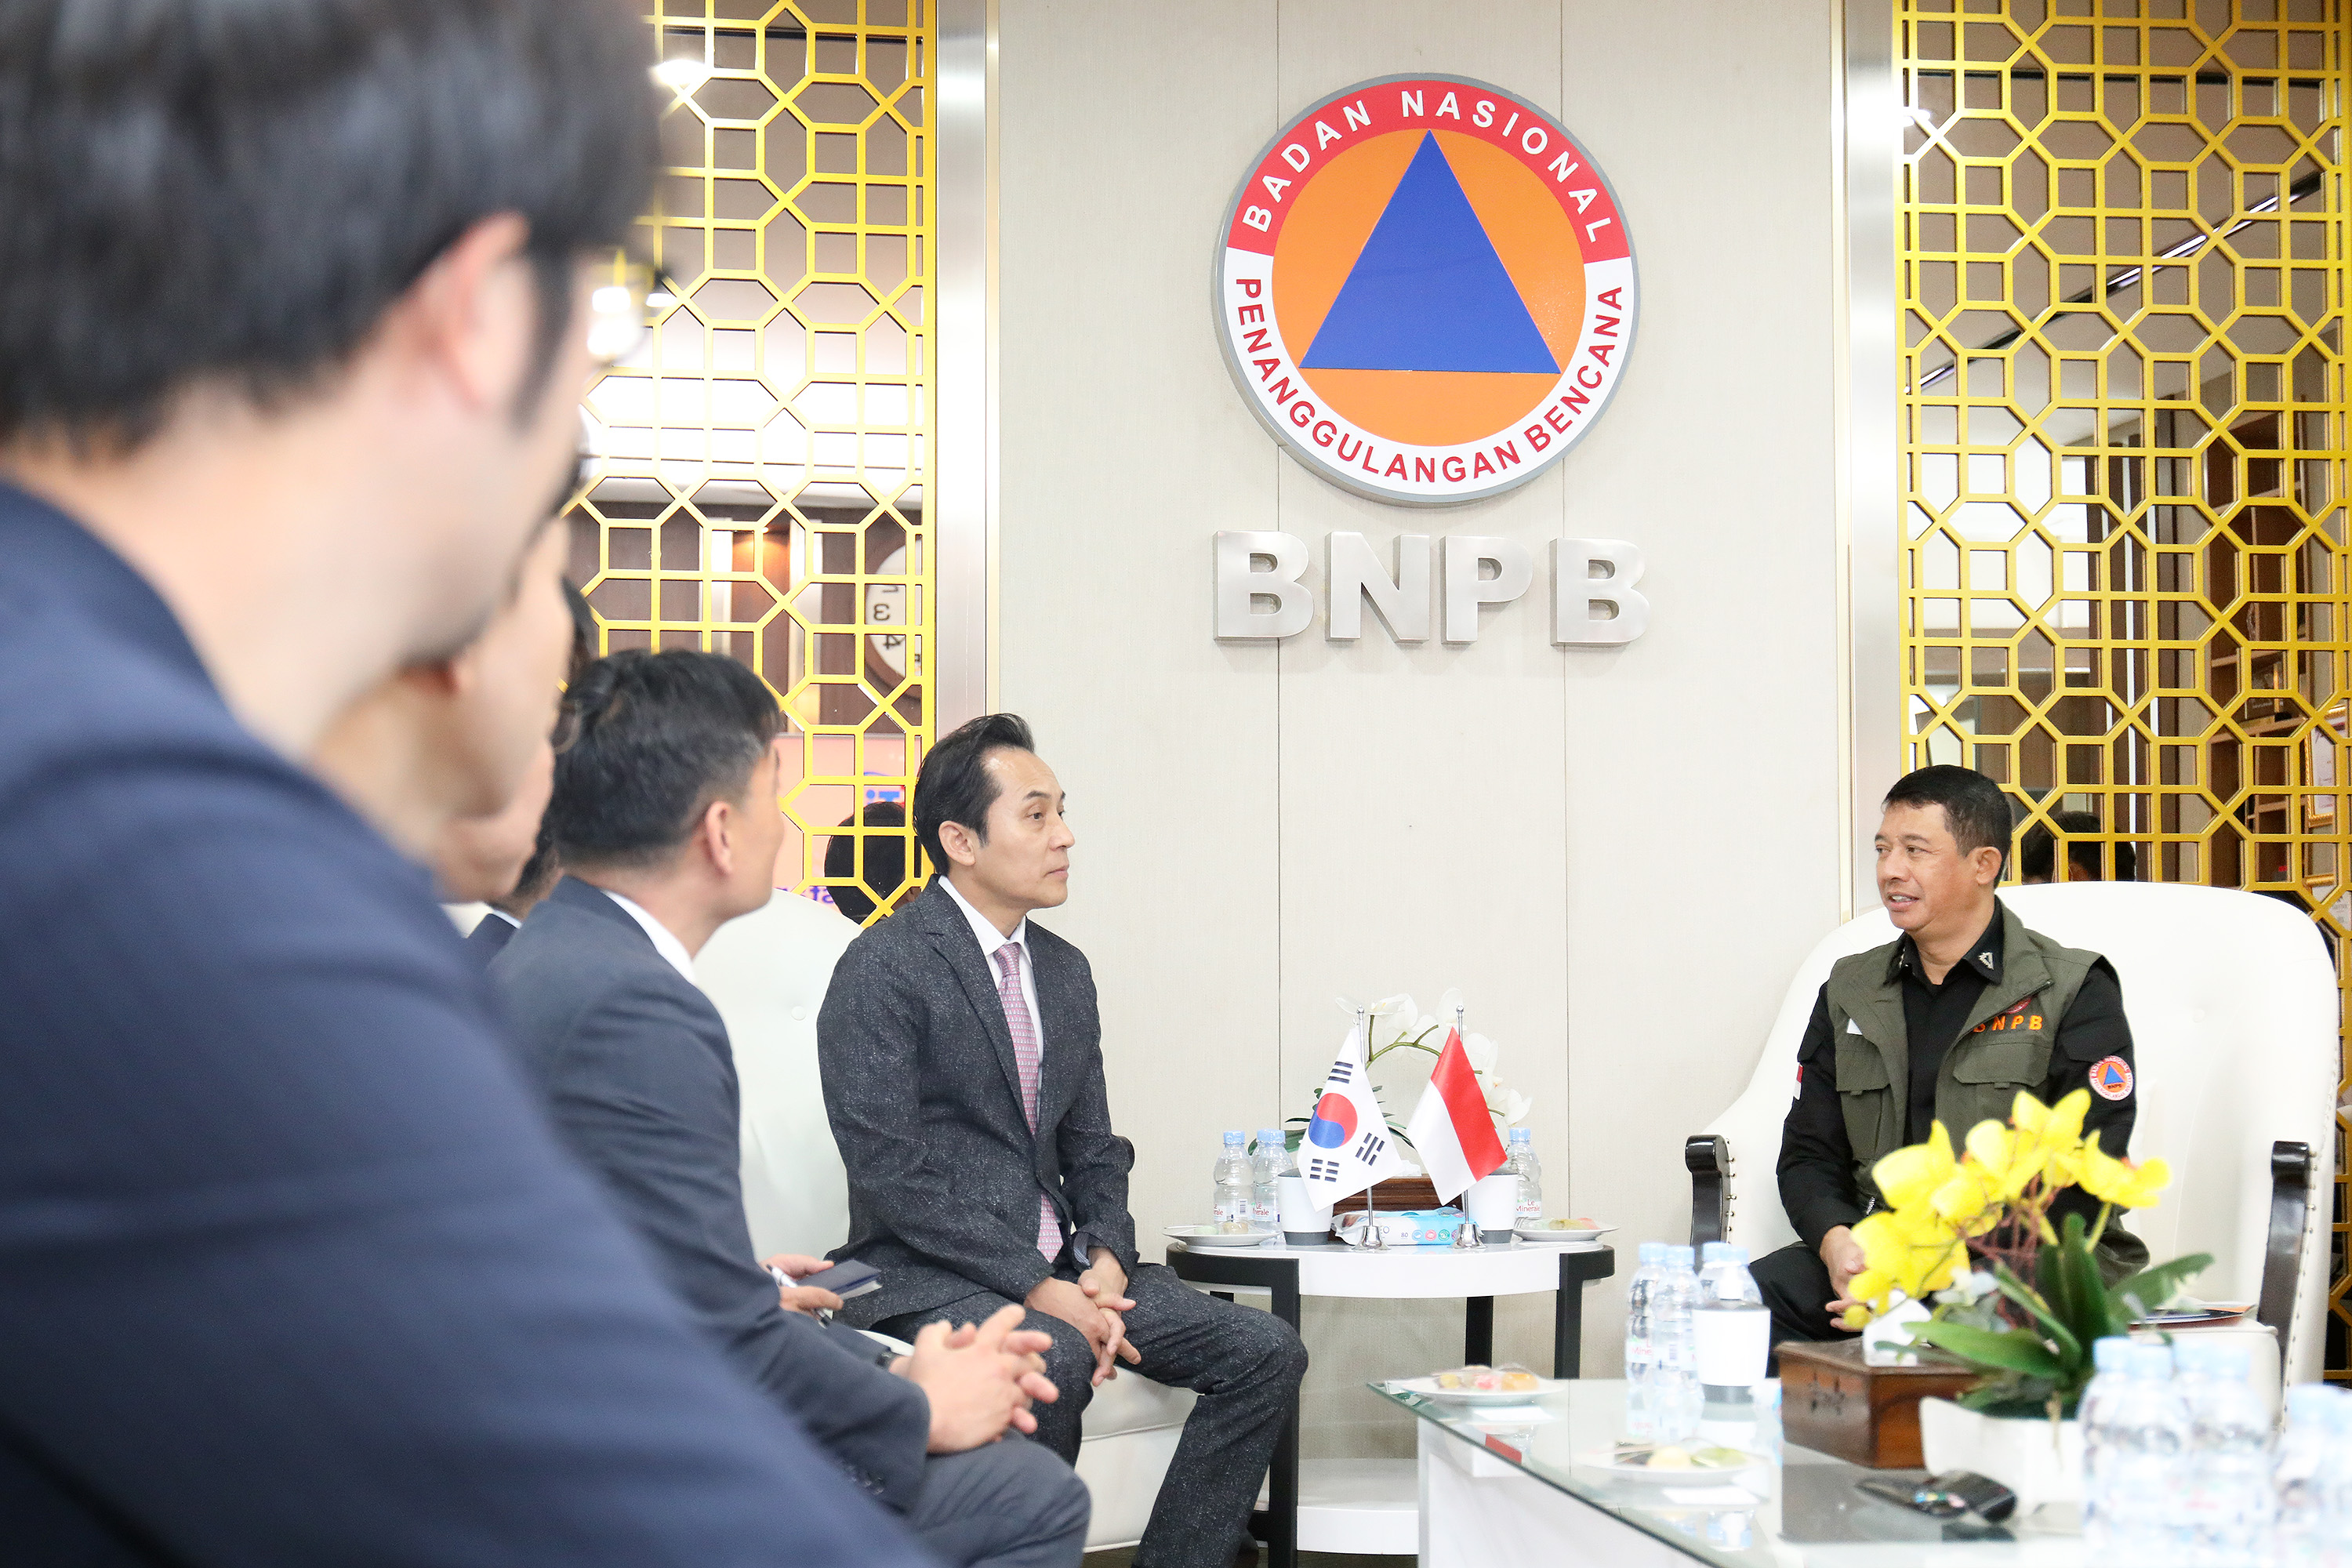 Kepala BNPB Letjen TNI Suharyanto S,Sos., M.M., (kanan) menerima kehadiran Presiden KISTI Kim Jaesoo bersama jajaran di Graha BNPB, Jakarta, Rabu (31/5).